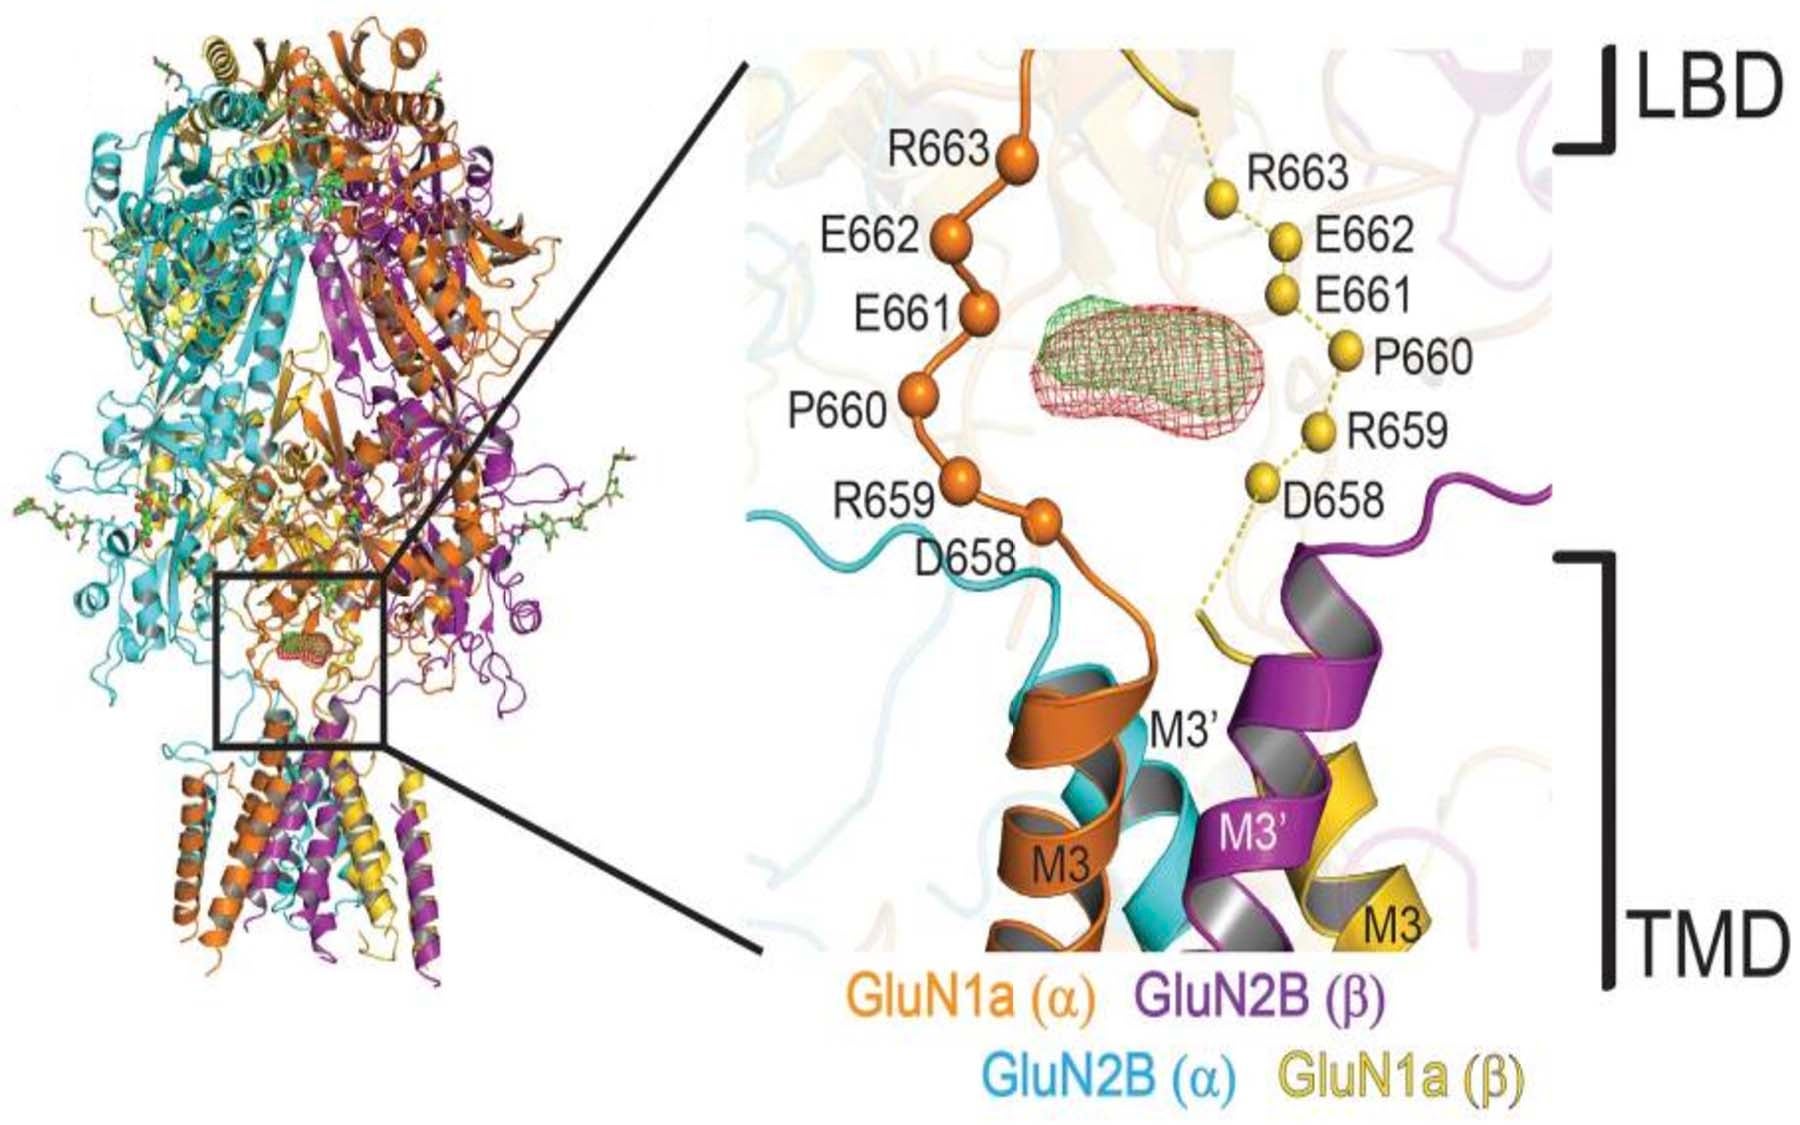 GluN1a/GluN2B NMDA receptors calcium-binding